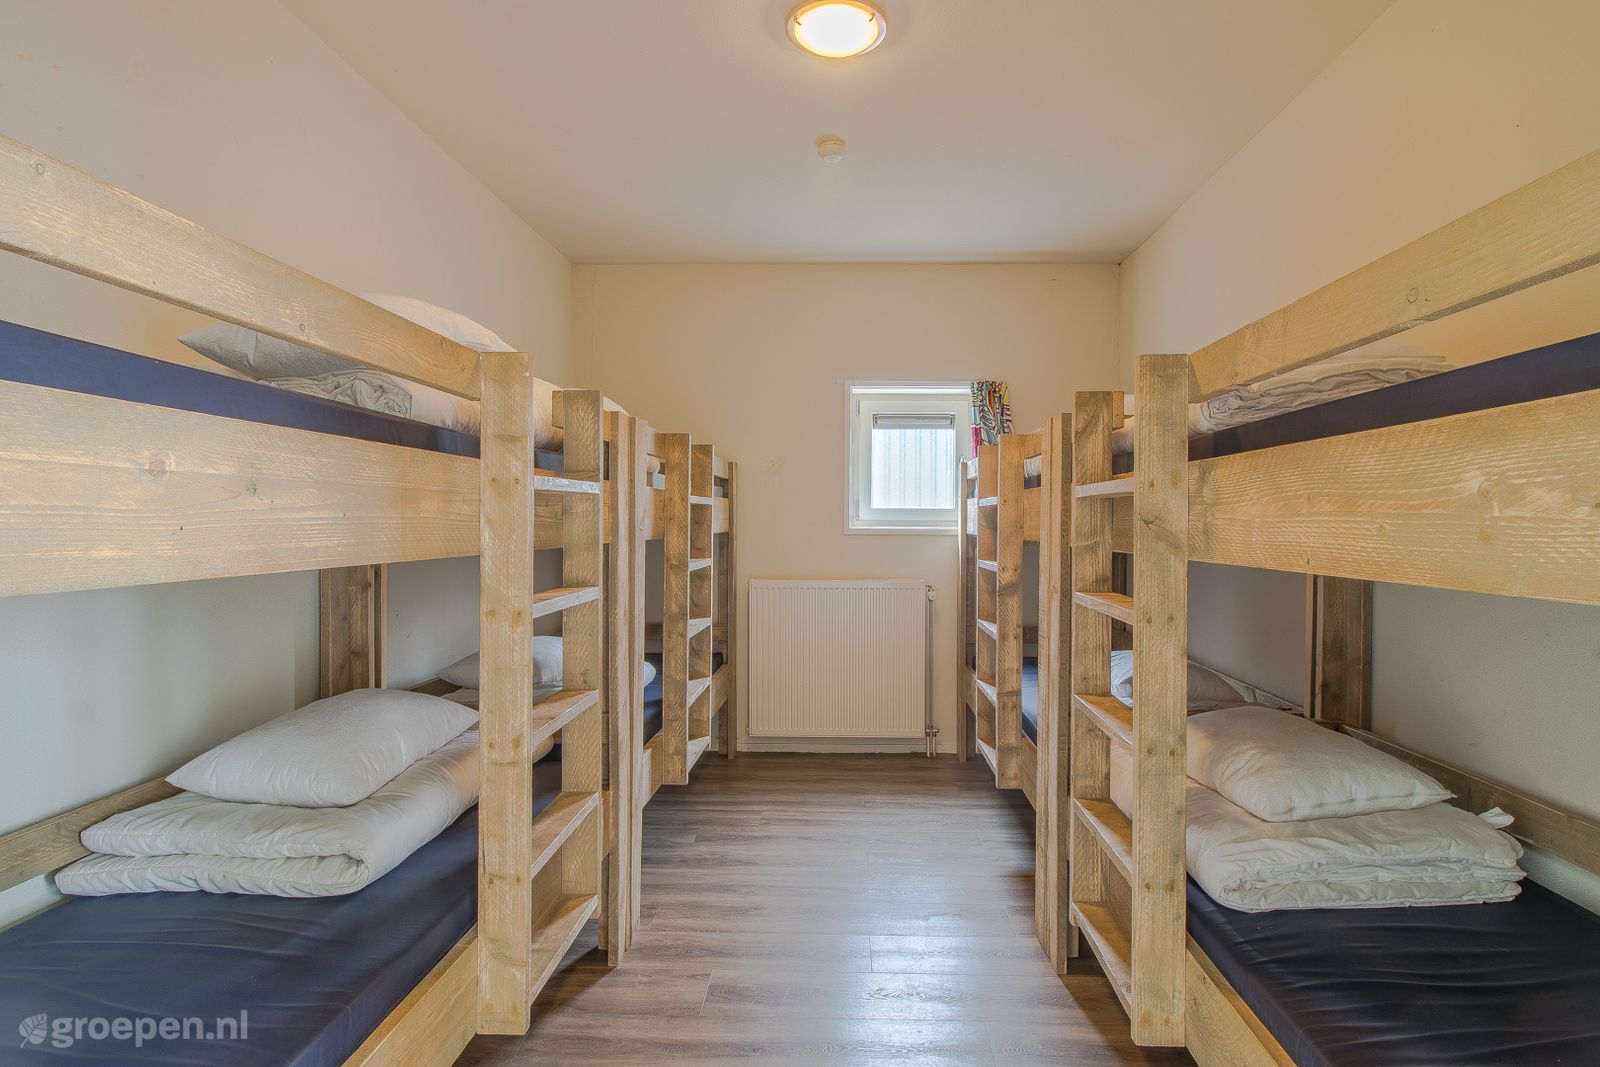 Group accommodation Haaksbergen